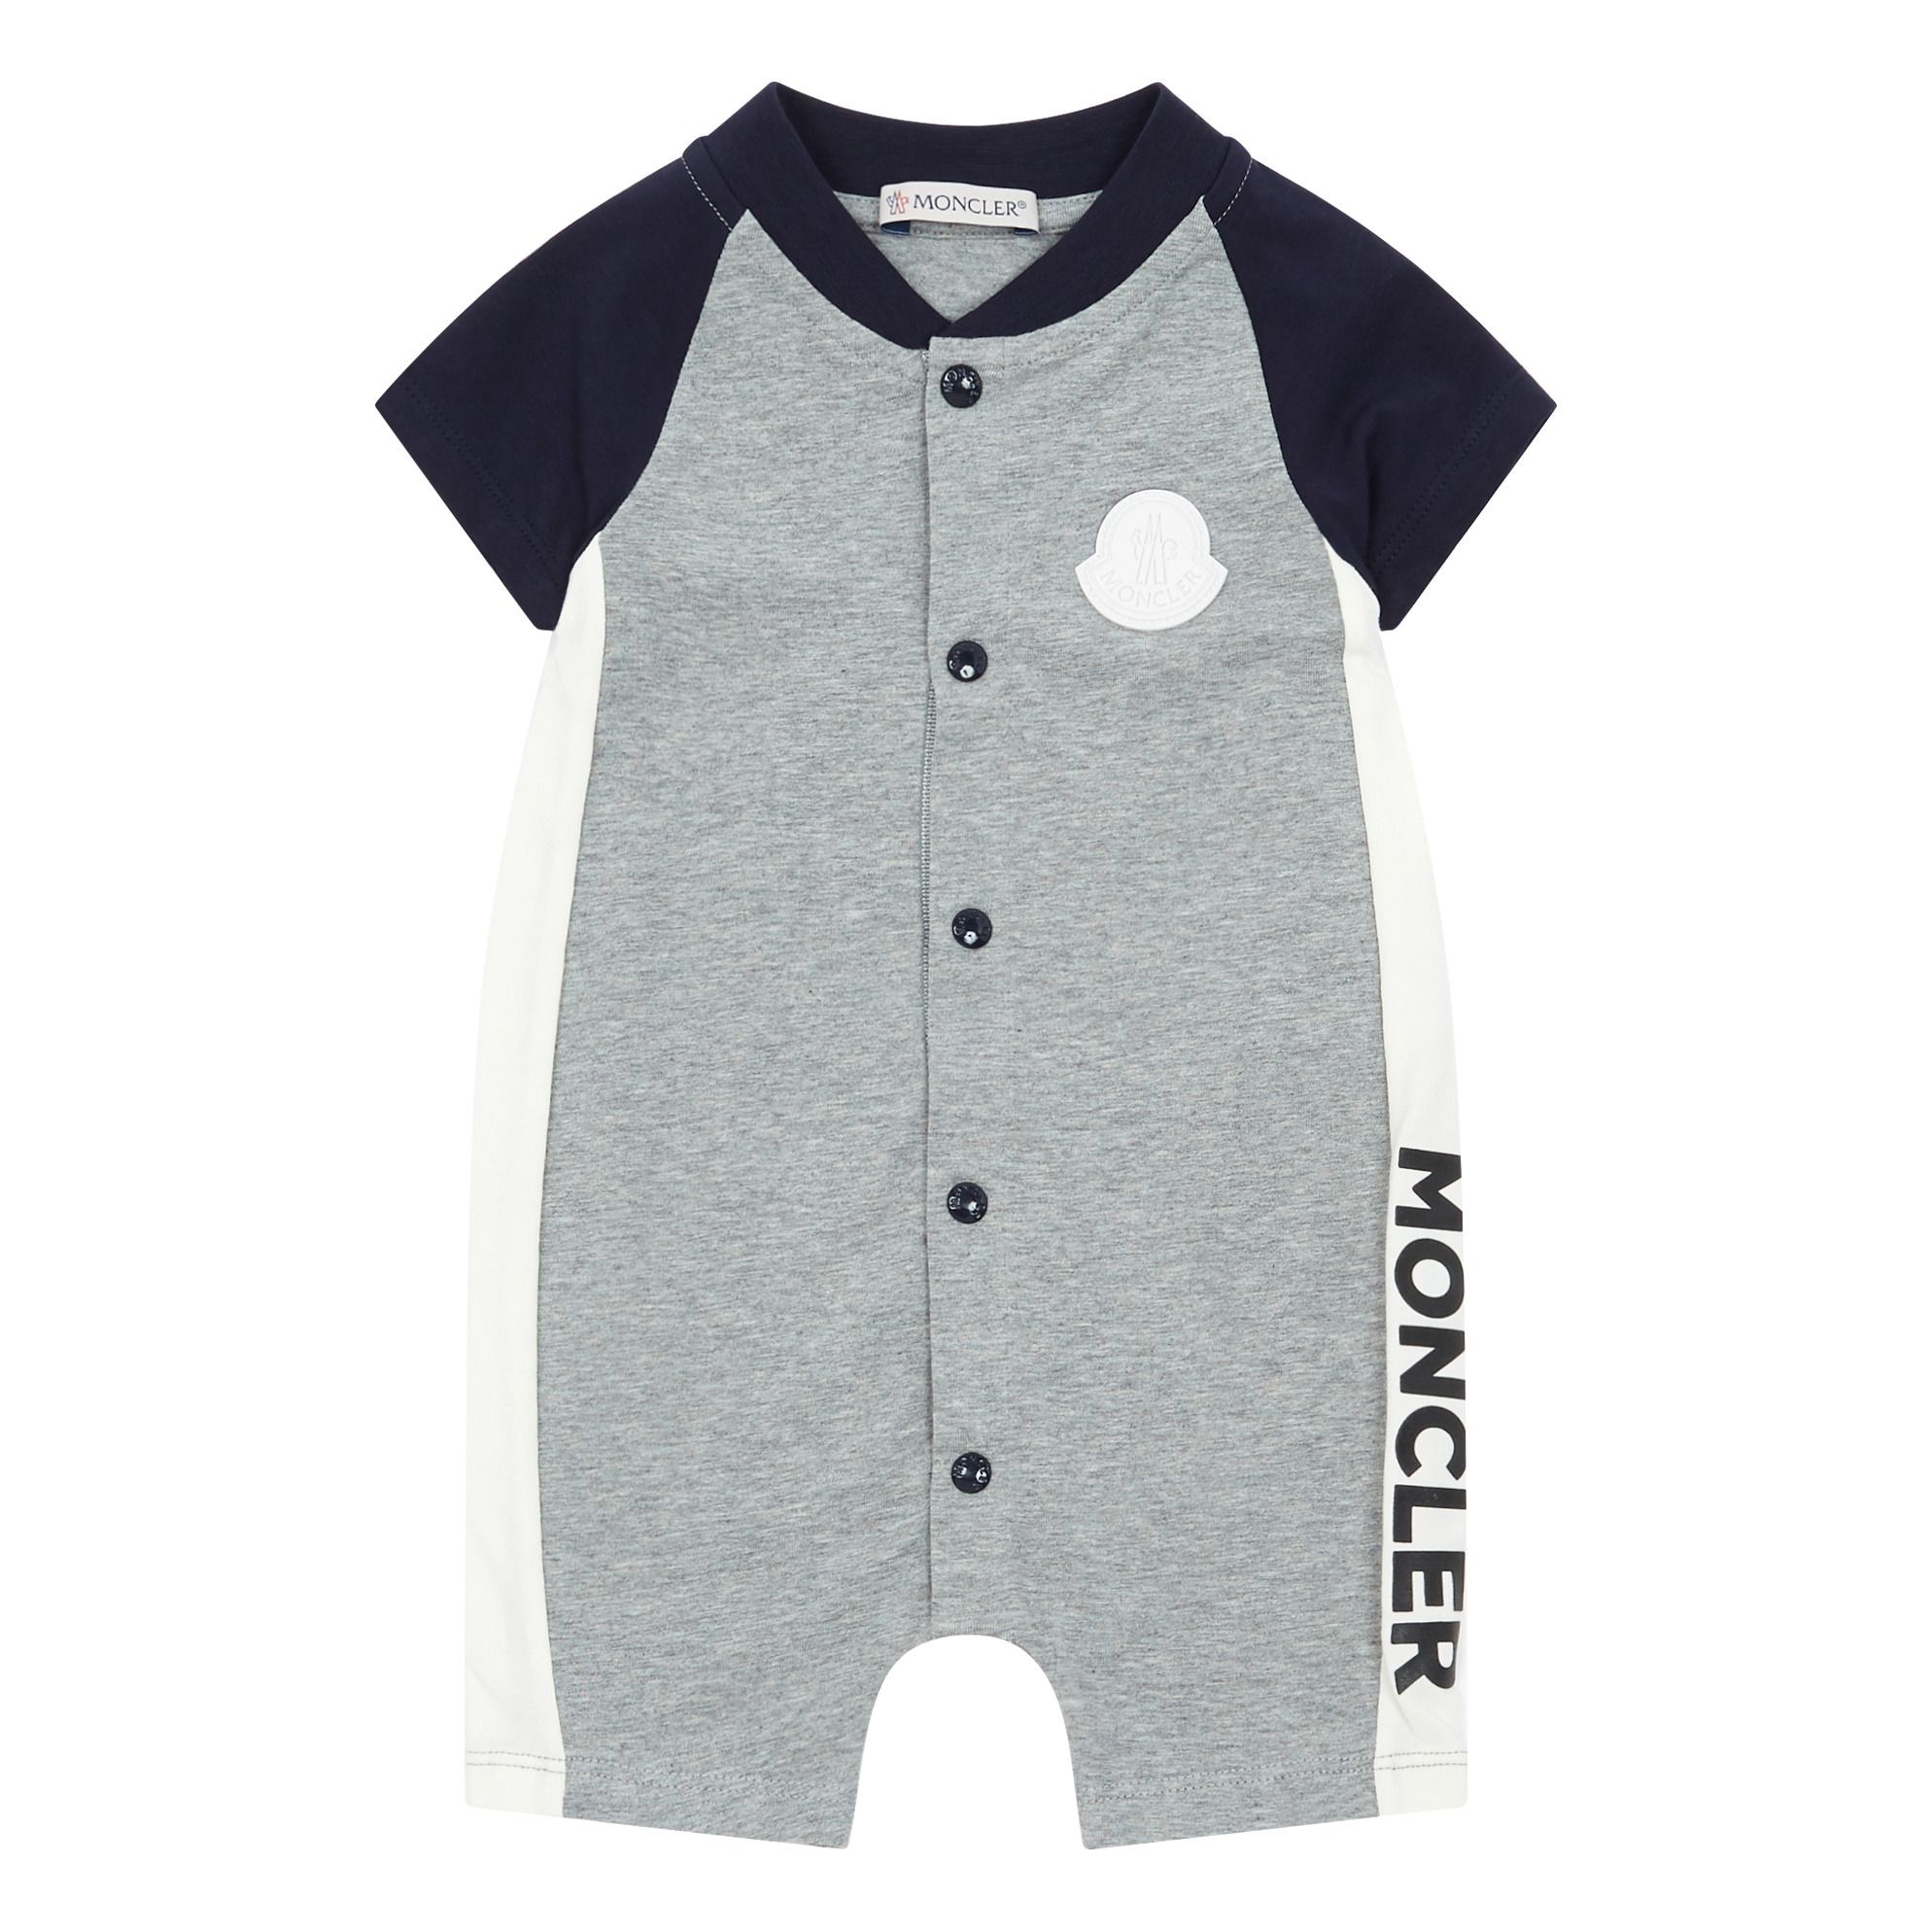 Playsuit Grey Moncler Fashion Baby